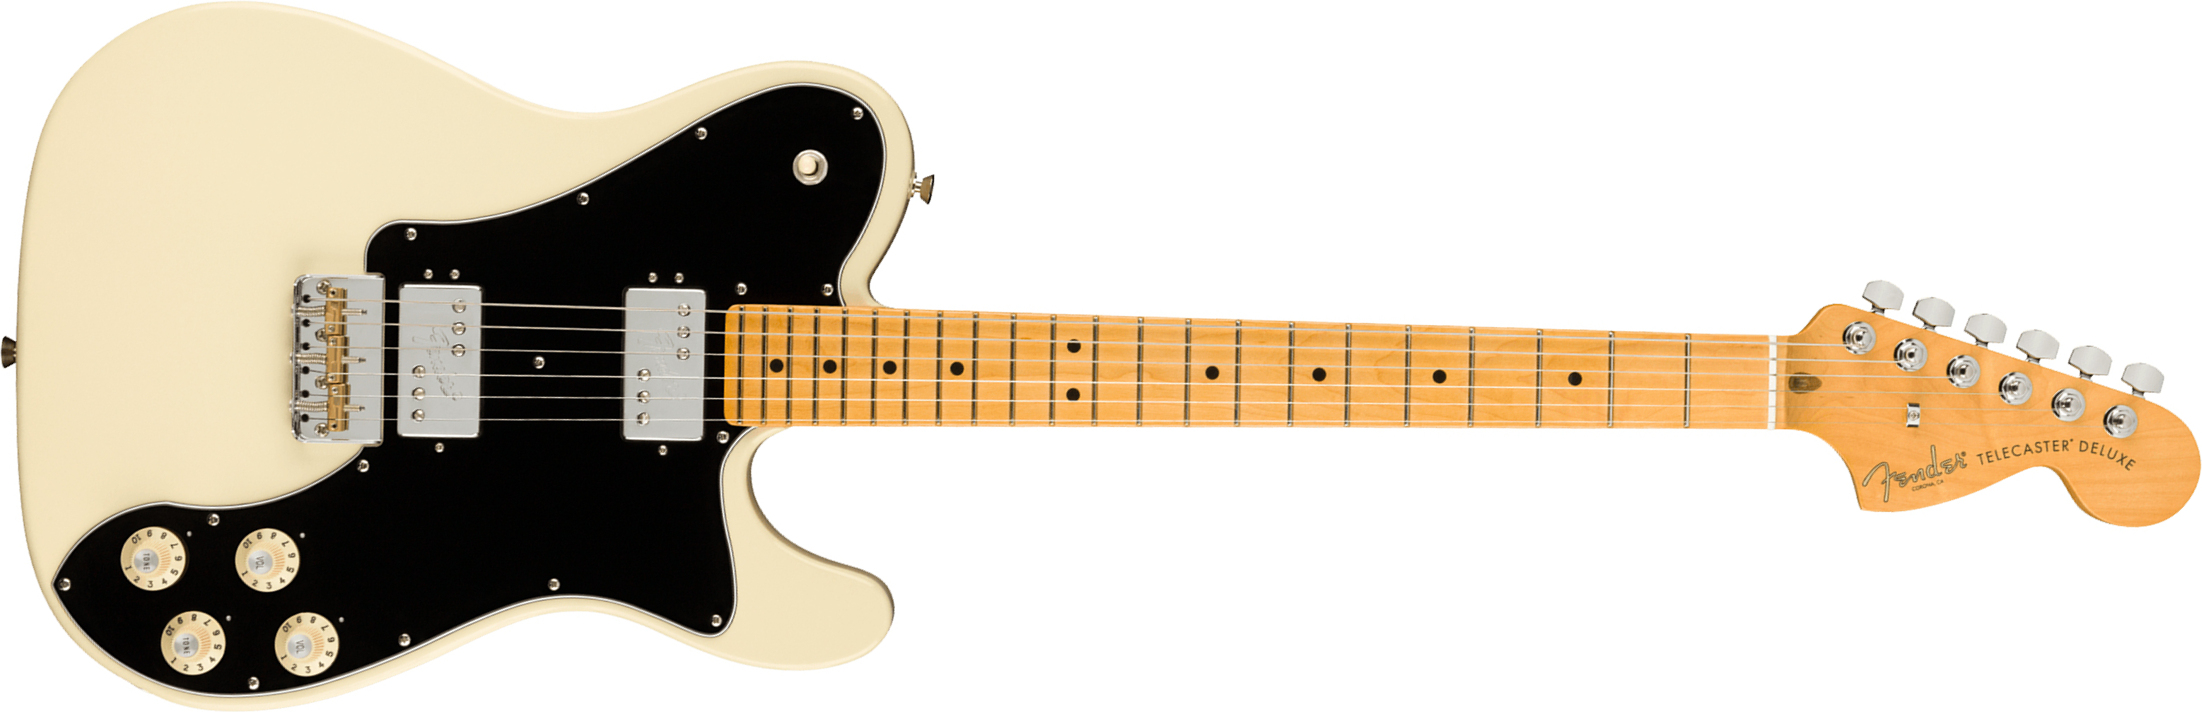 Fender Tele Deluxe American Professional Ii Usa Mn - Olympic White - E-Gitarre in Teleform - Main picture